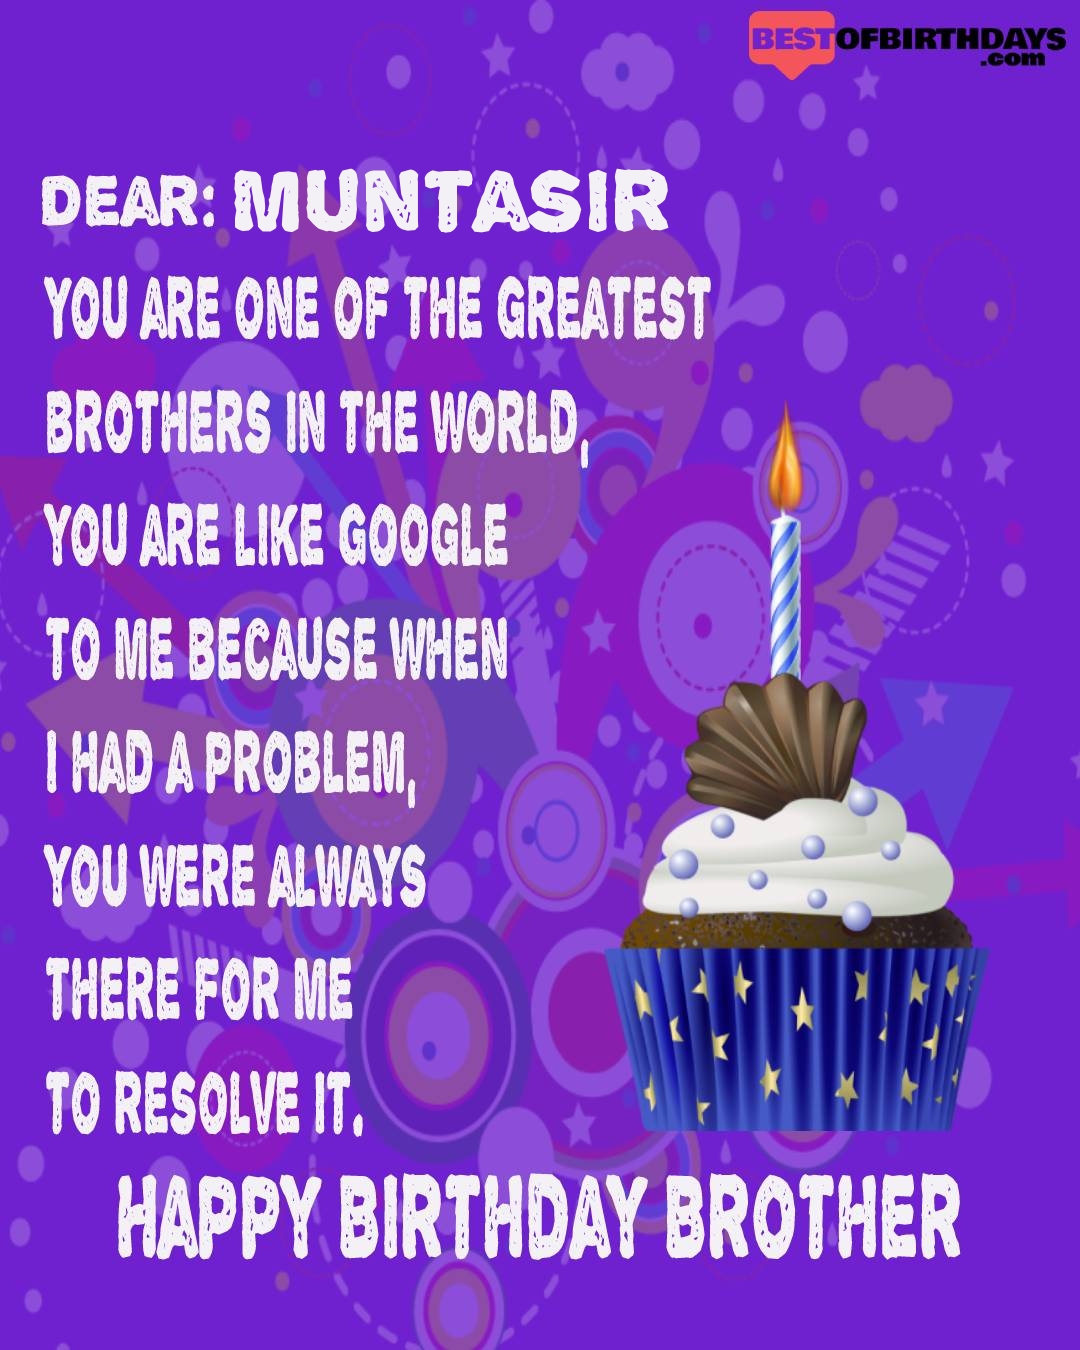 Happy birthday muntasir bhai brother bro